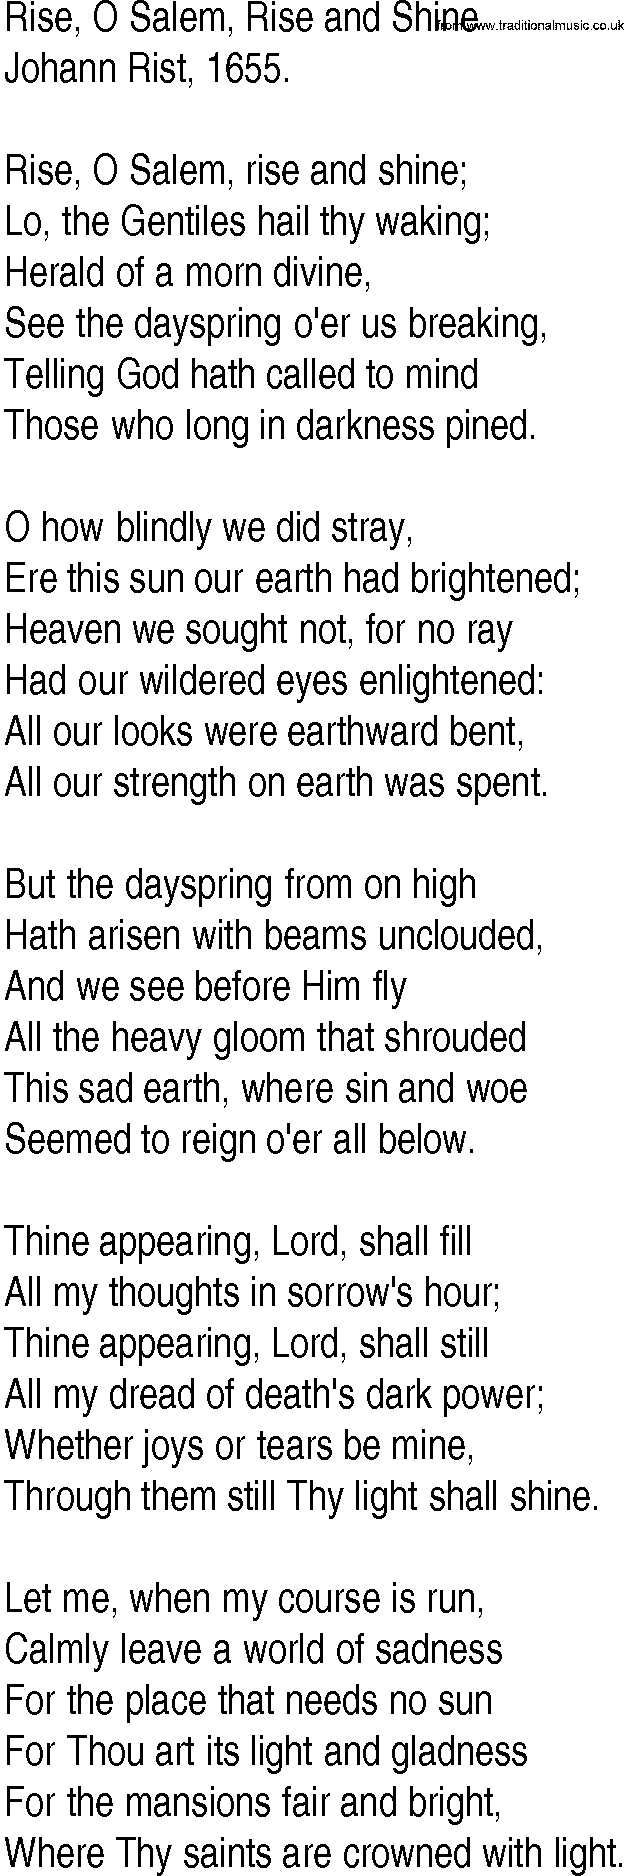 Hymn and Gospel Song: Rise, O Salem, Rise and Shine by Johann Rist lyrics